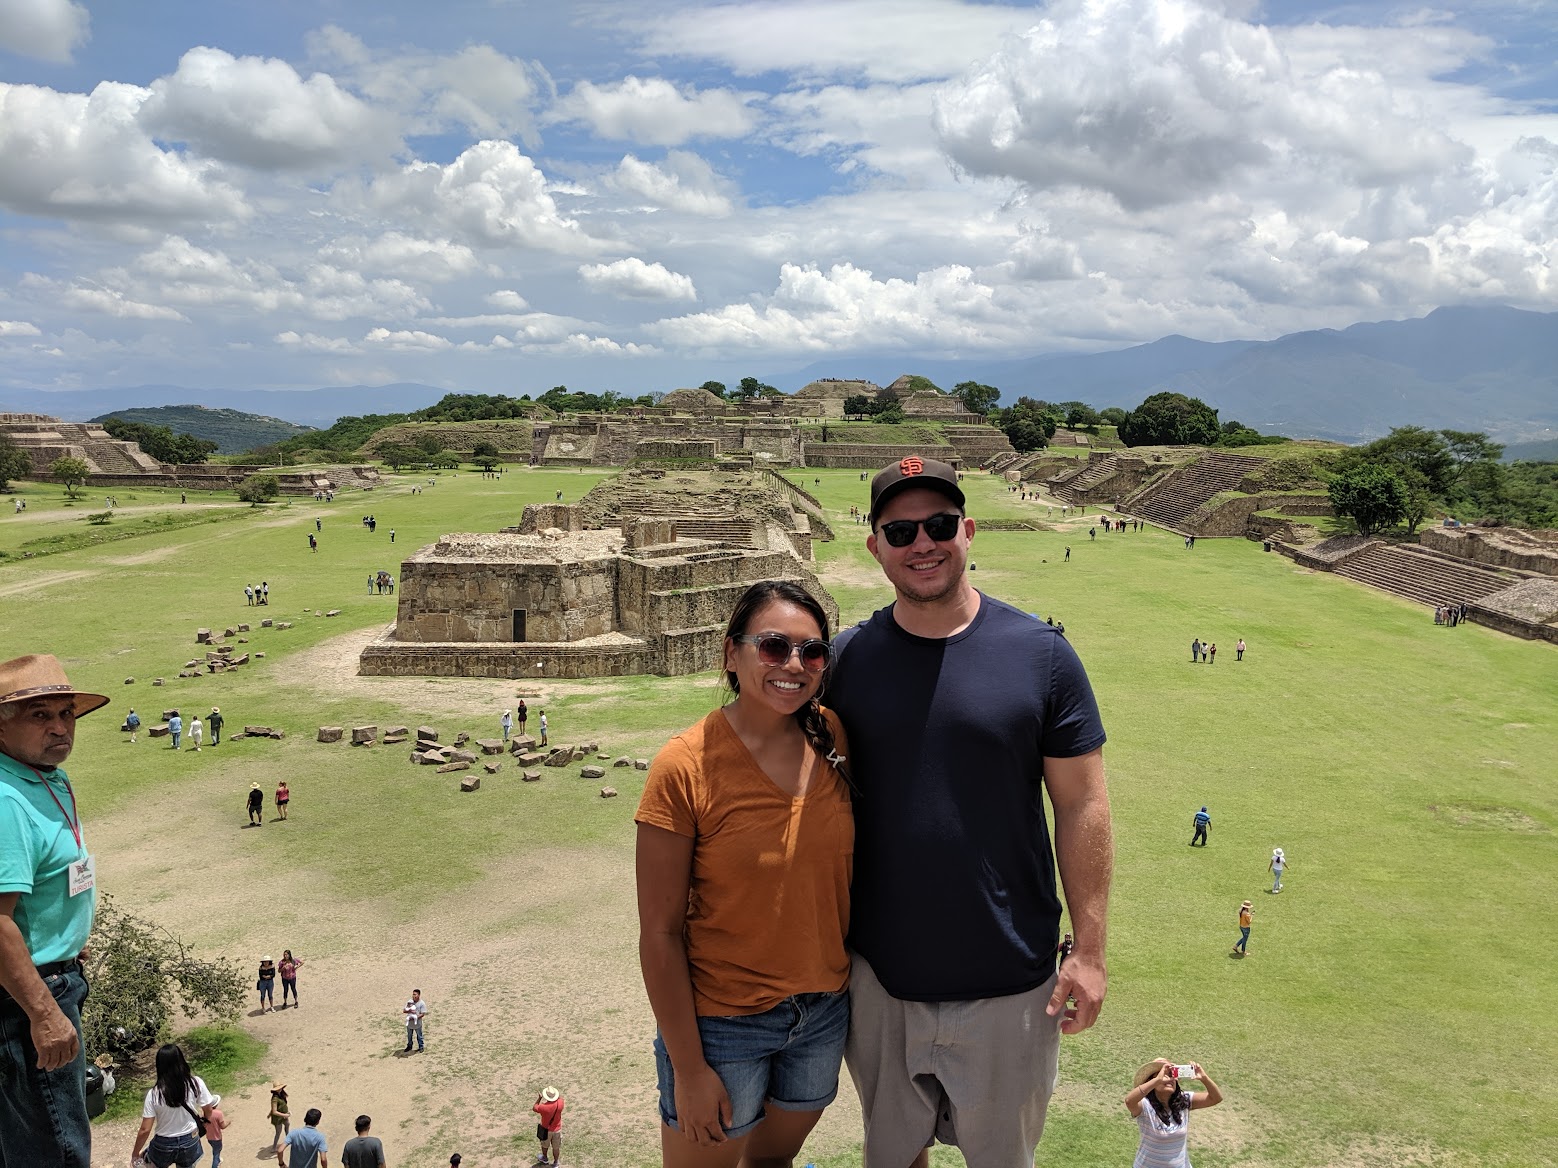 Tyler Jordan and his wife visiting ancient ruins.